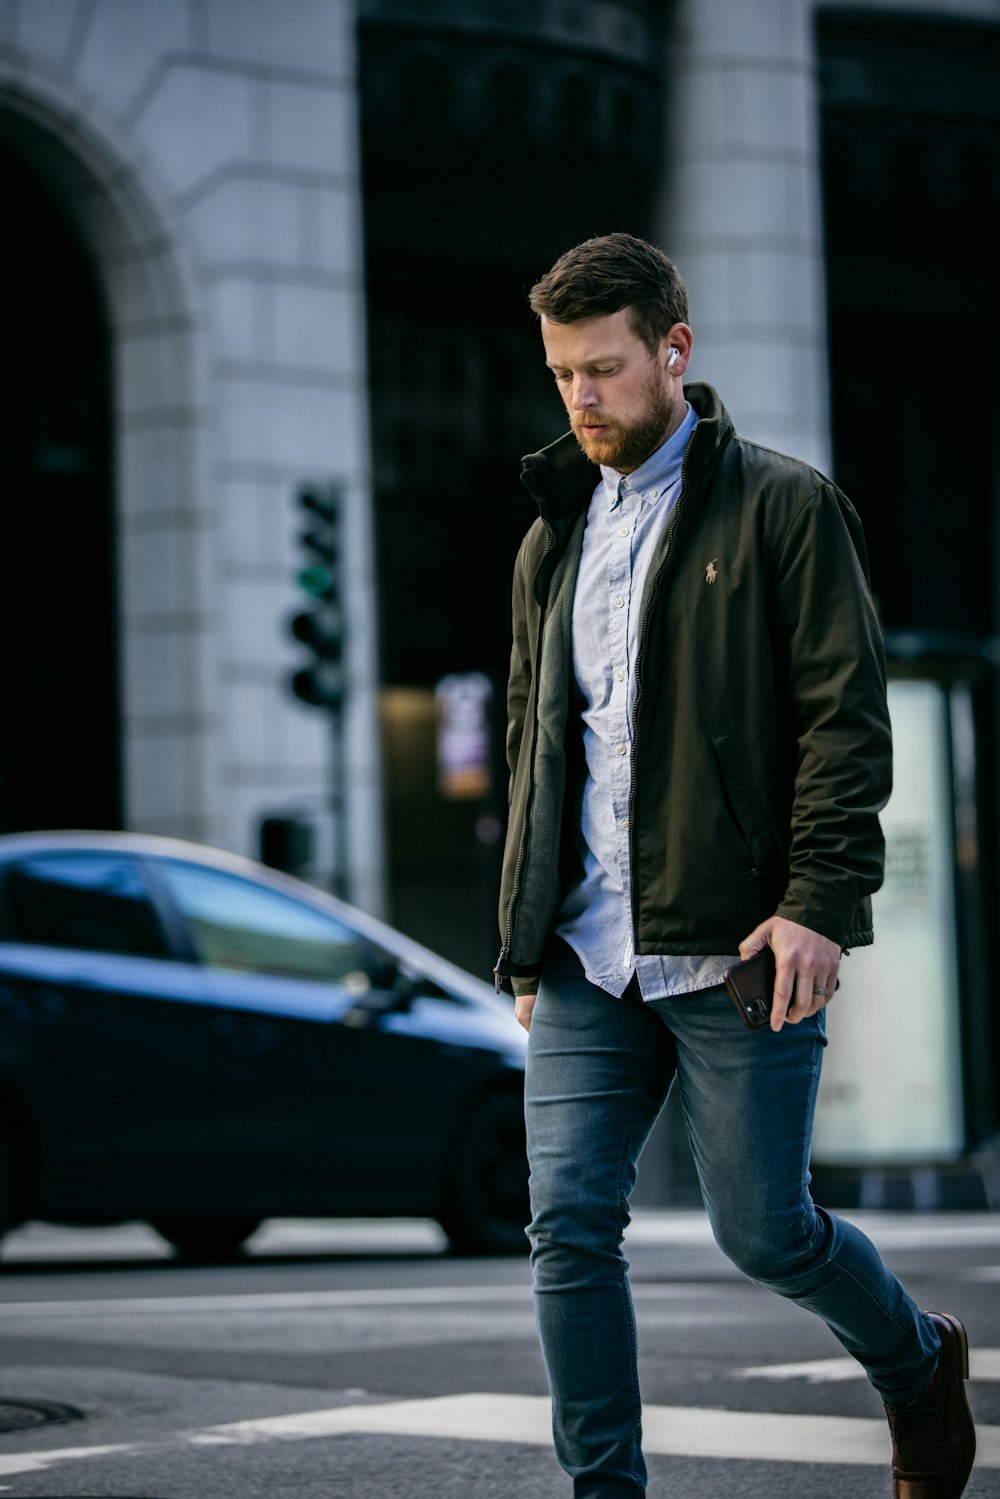 a man walking across a street while wearing a jacket